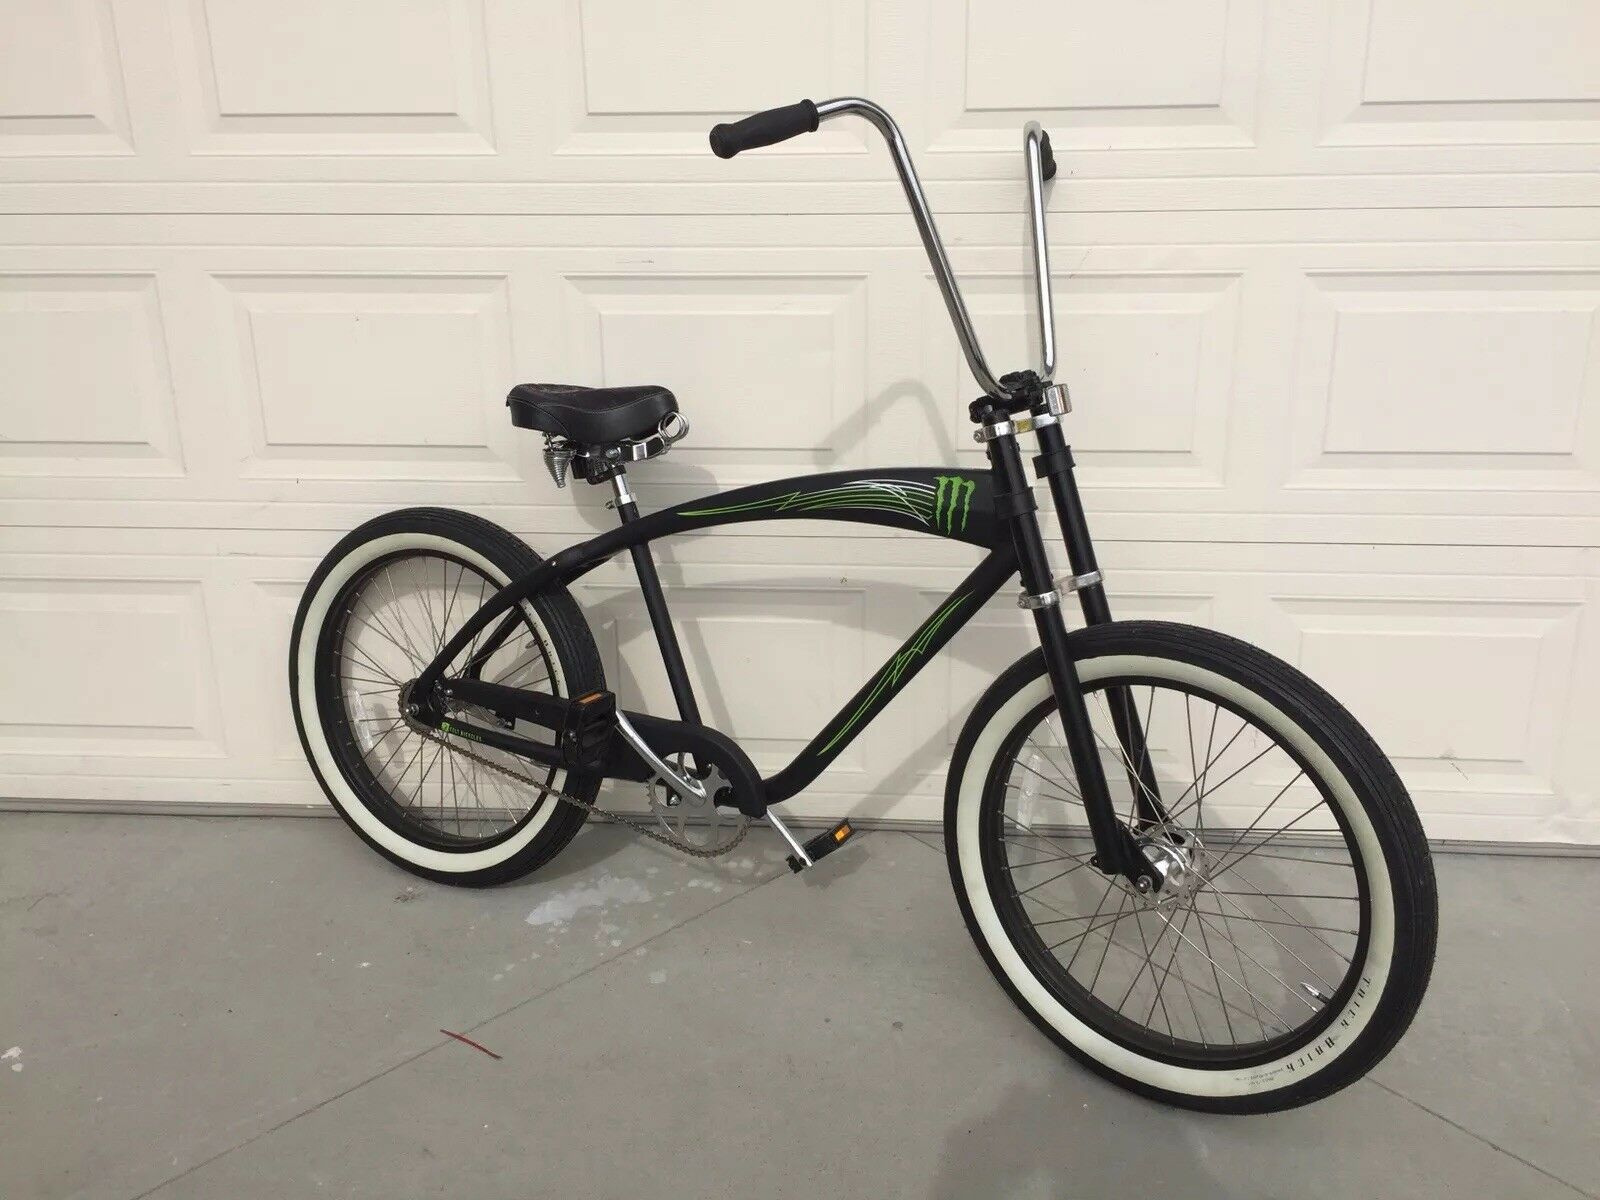 New-Felt-Monster-Limited-Edition-Cruiser-Bicycle-Chopper.jpg